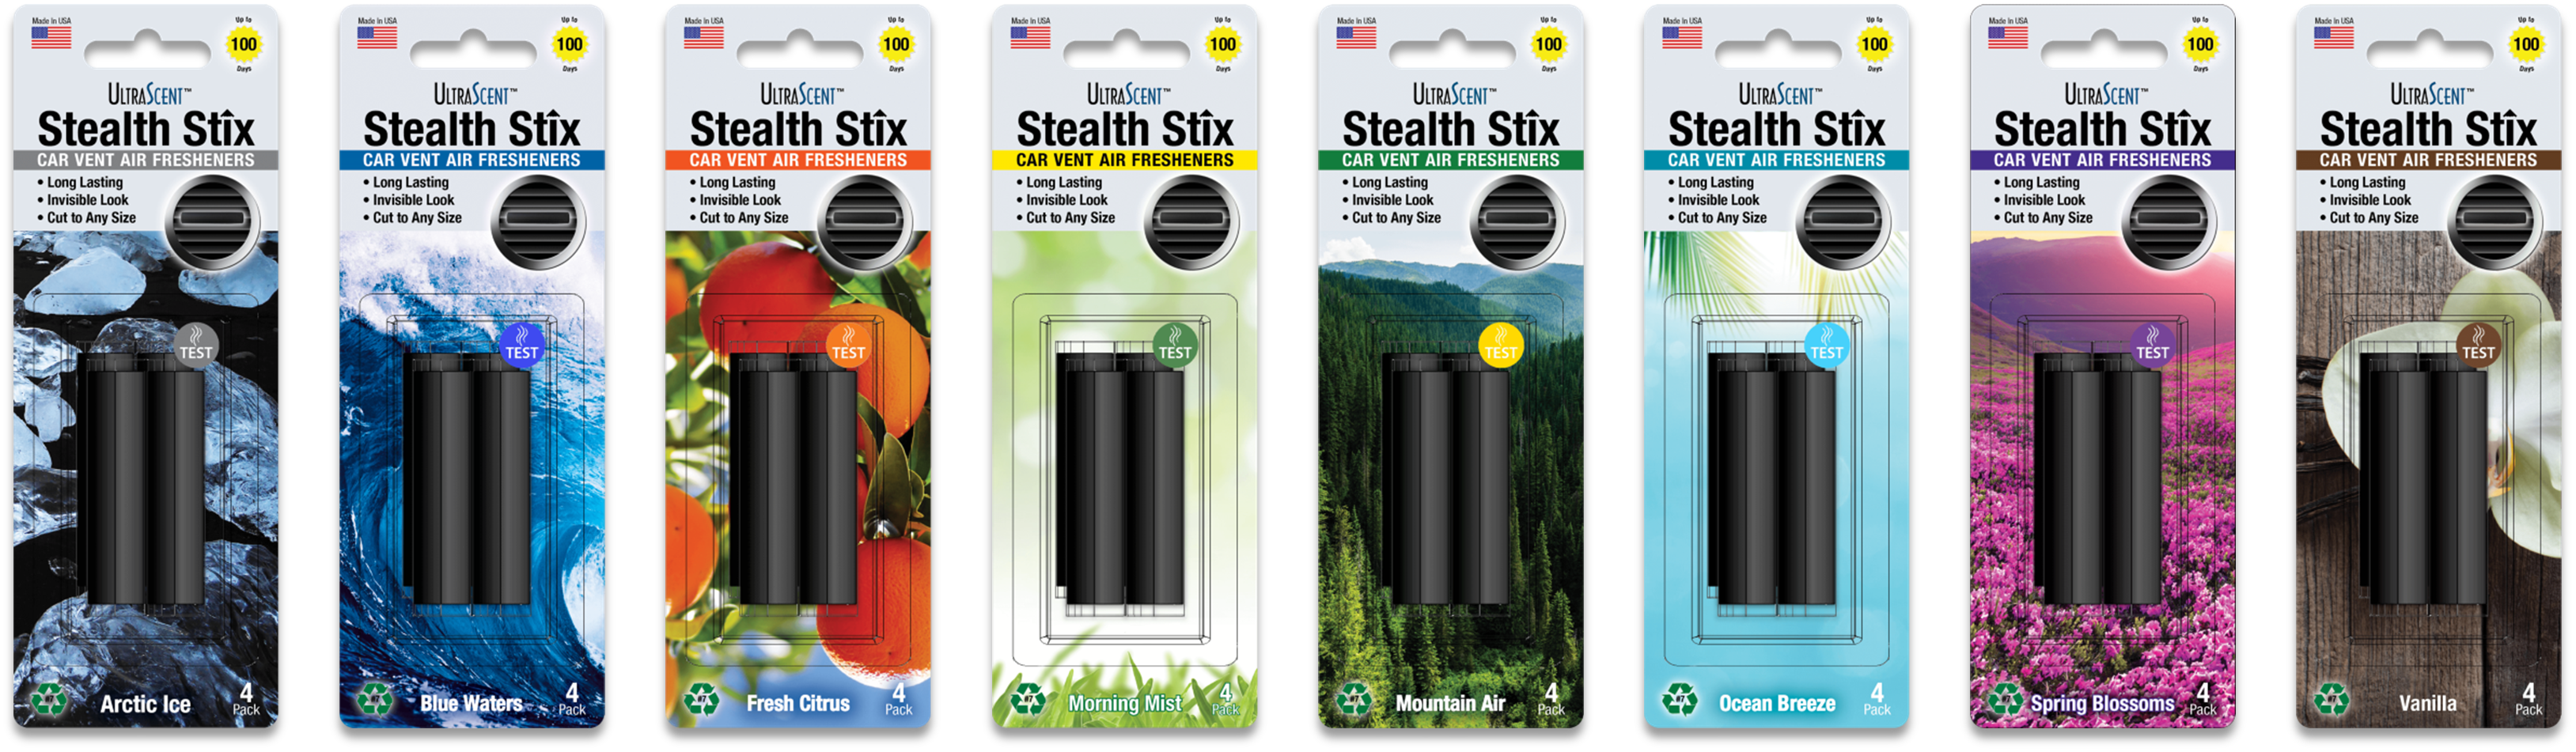 UltraScent Stealth Stix 4-Pack Product Line